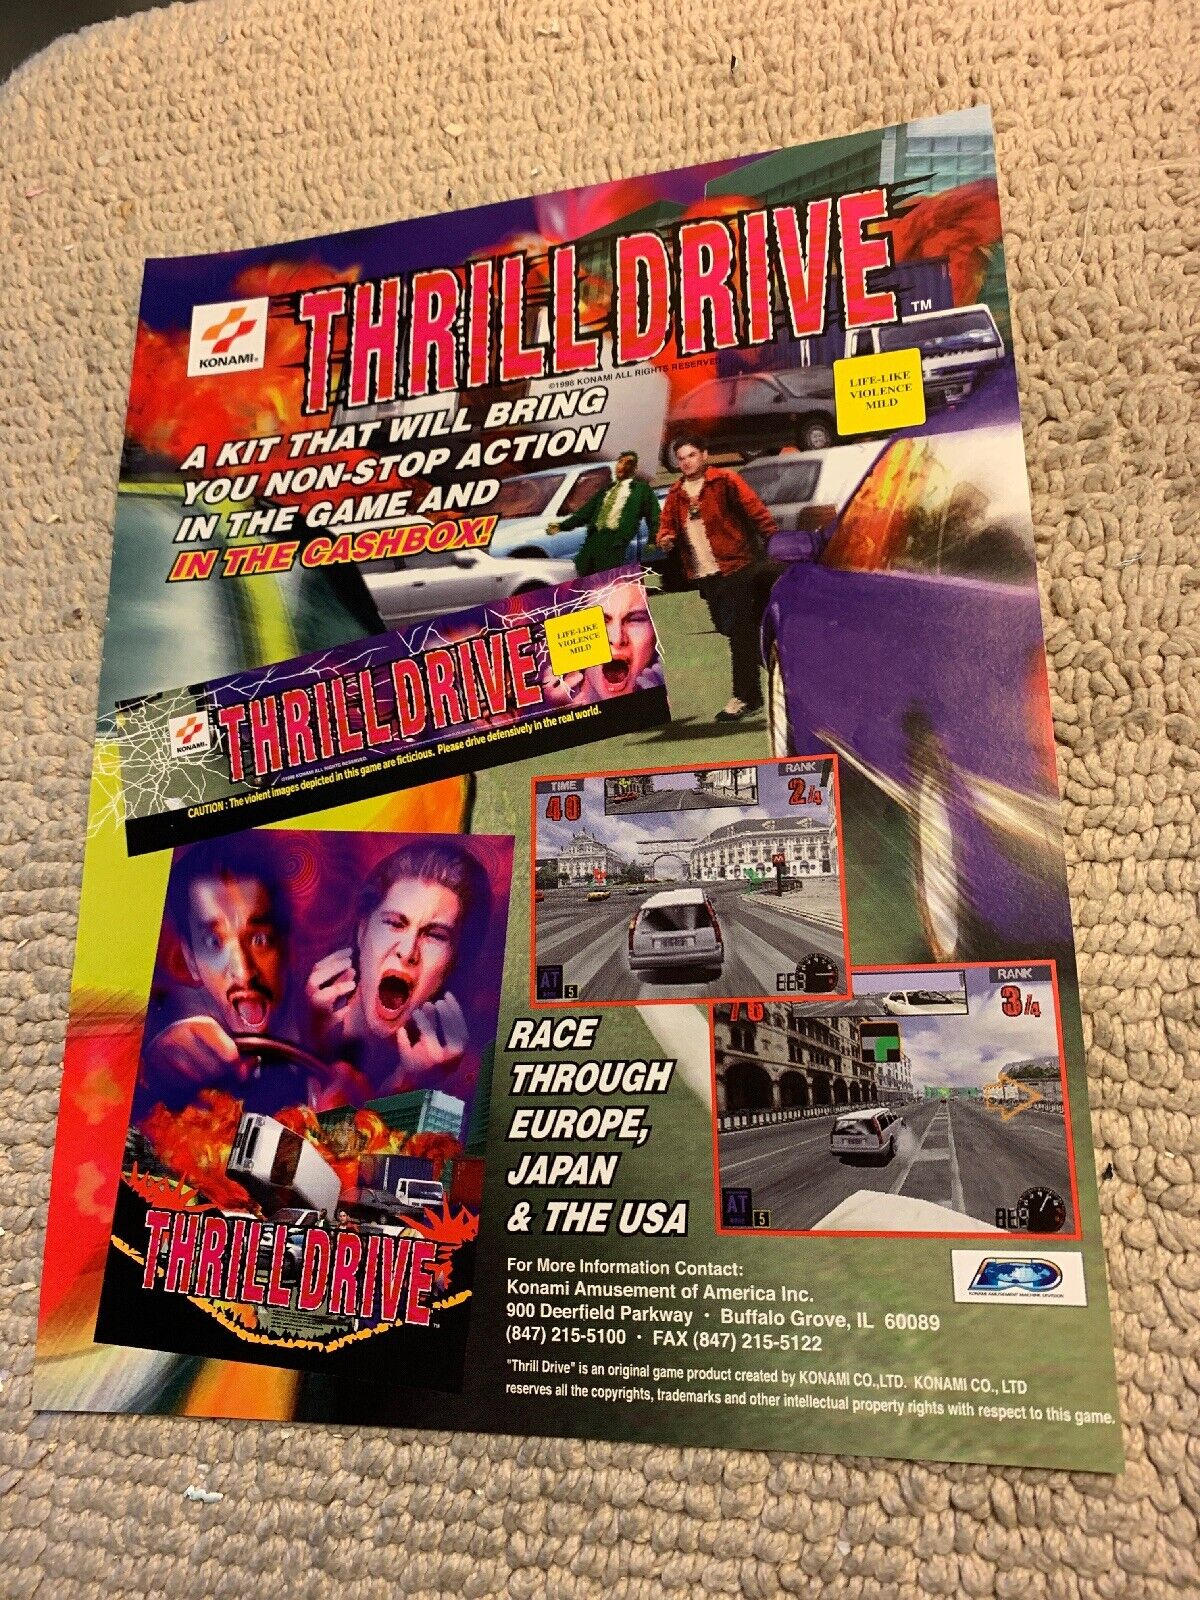 11-8 1/4” Thrill Drive Konami ARCADE VIDEO GAME FLYER